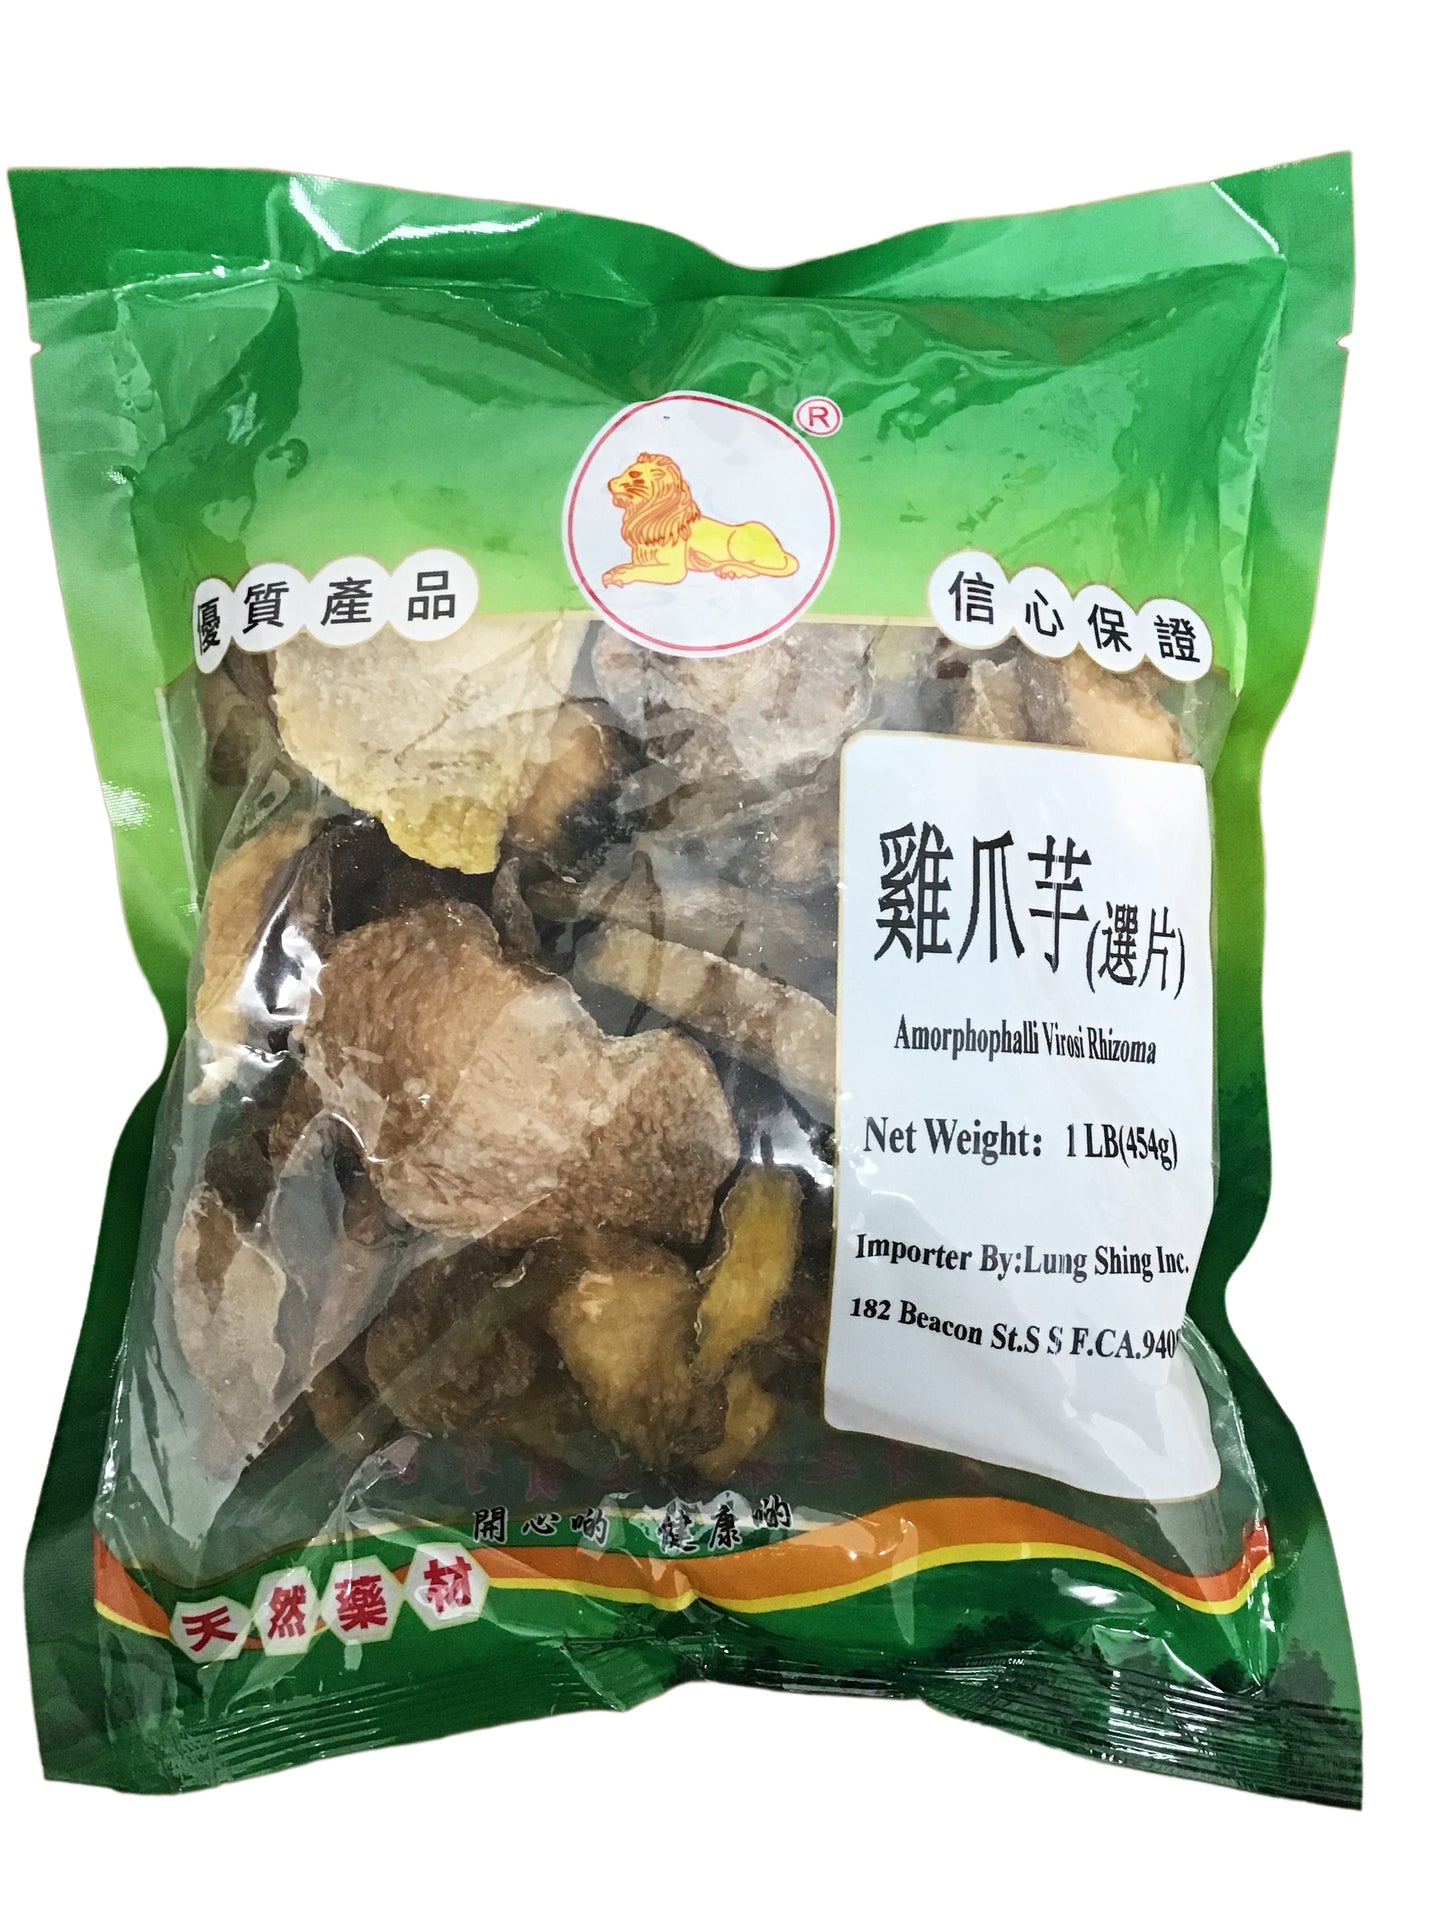 Dried Taro (Amorphophallus Blume Rhizome) - 鸡爪芋 (jī zhuǎ yù)